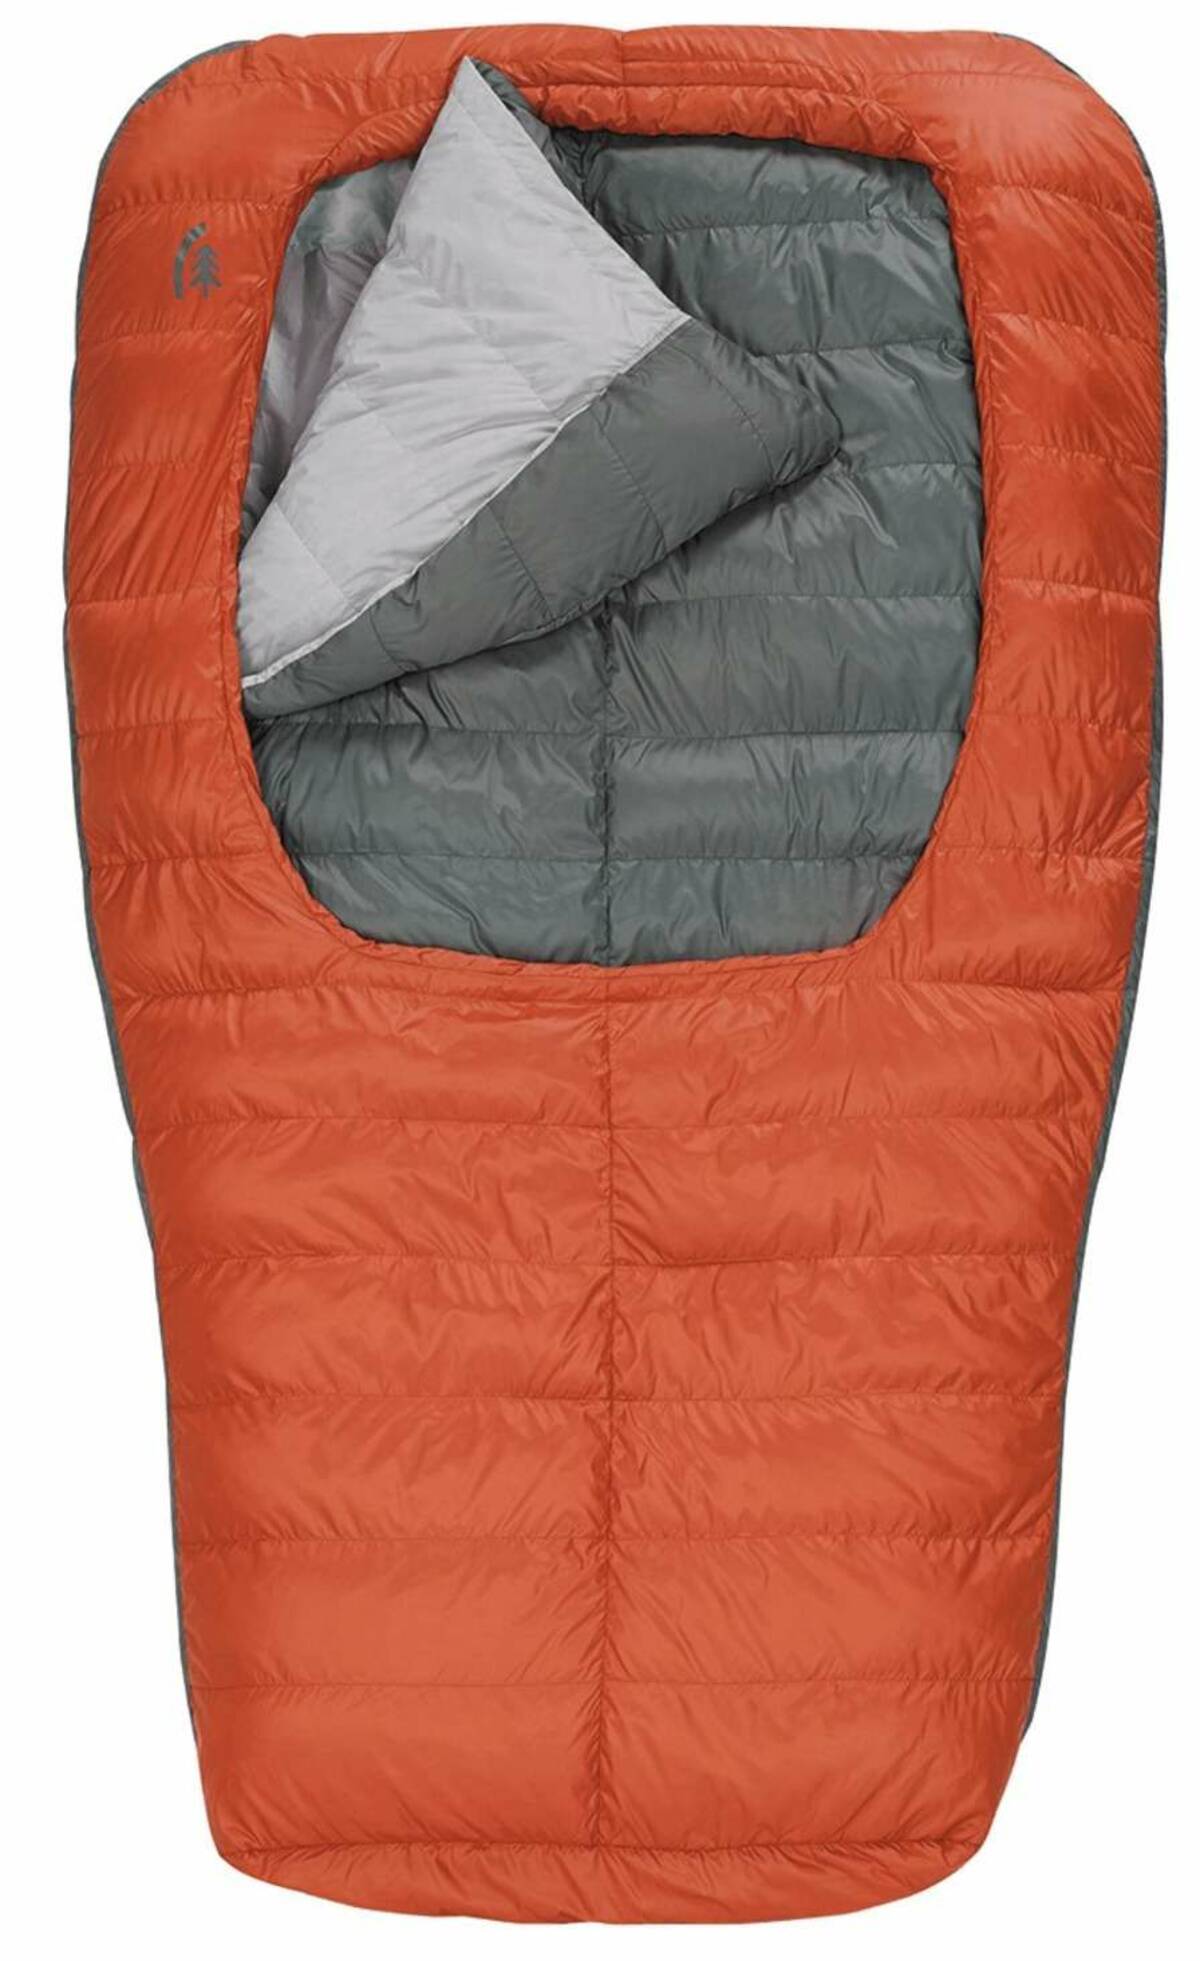 Sleepingo Double Sleeping Bag for Backpacking, Camping, Or Hiking – Hammocks